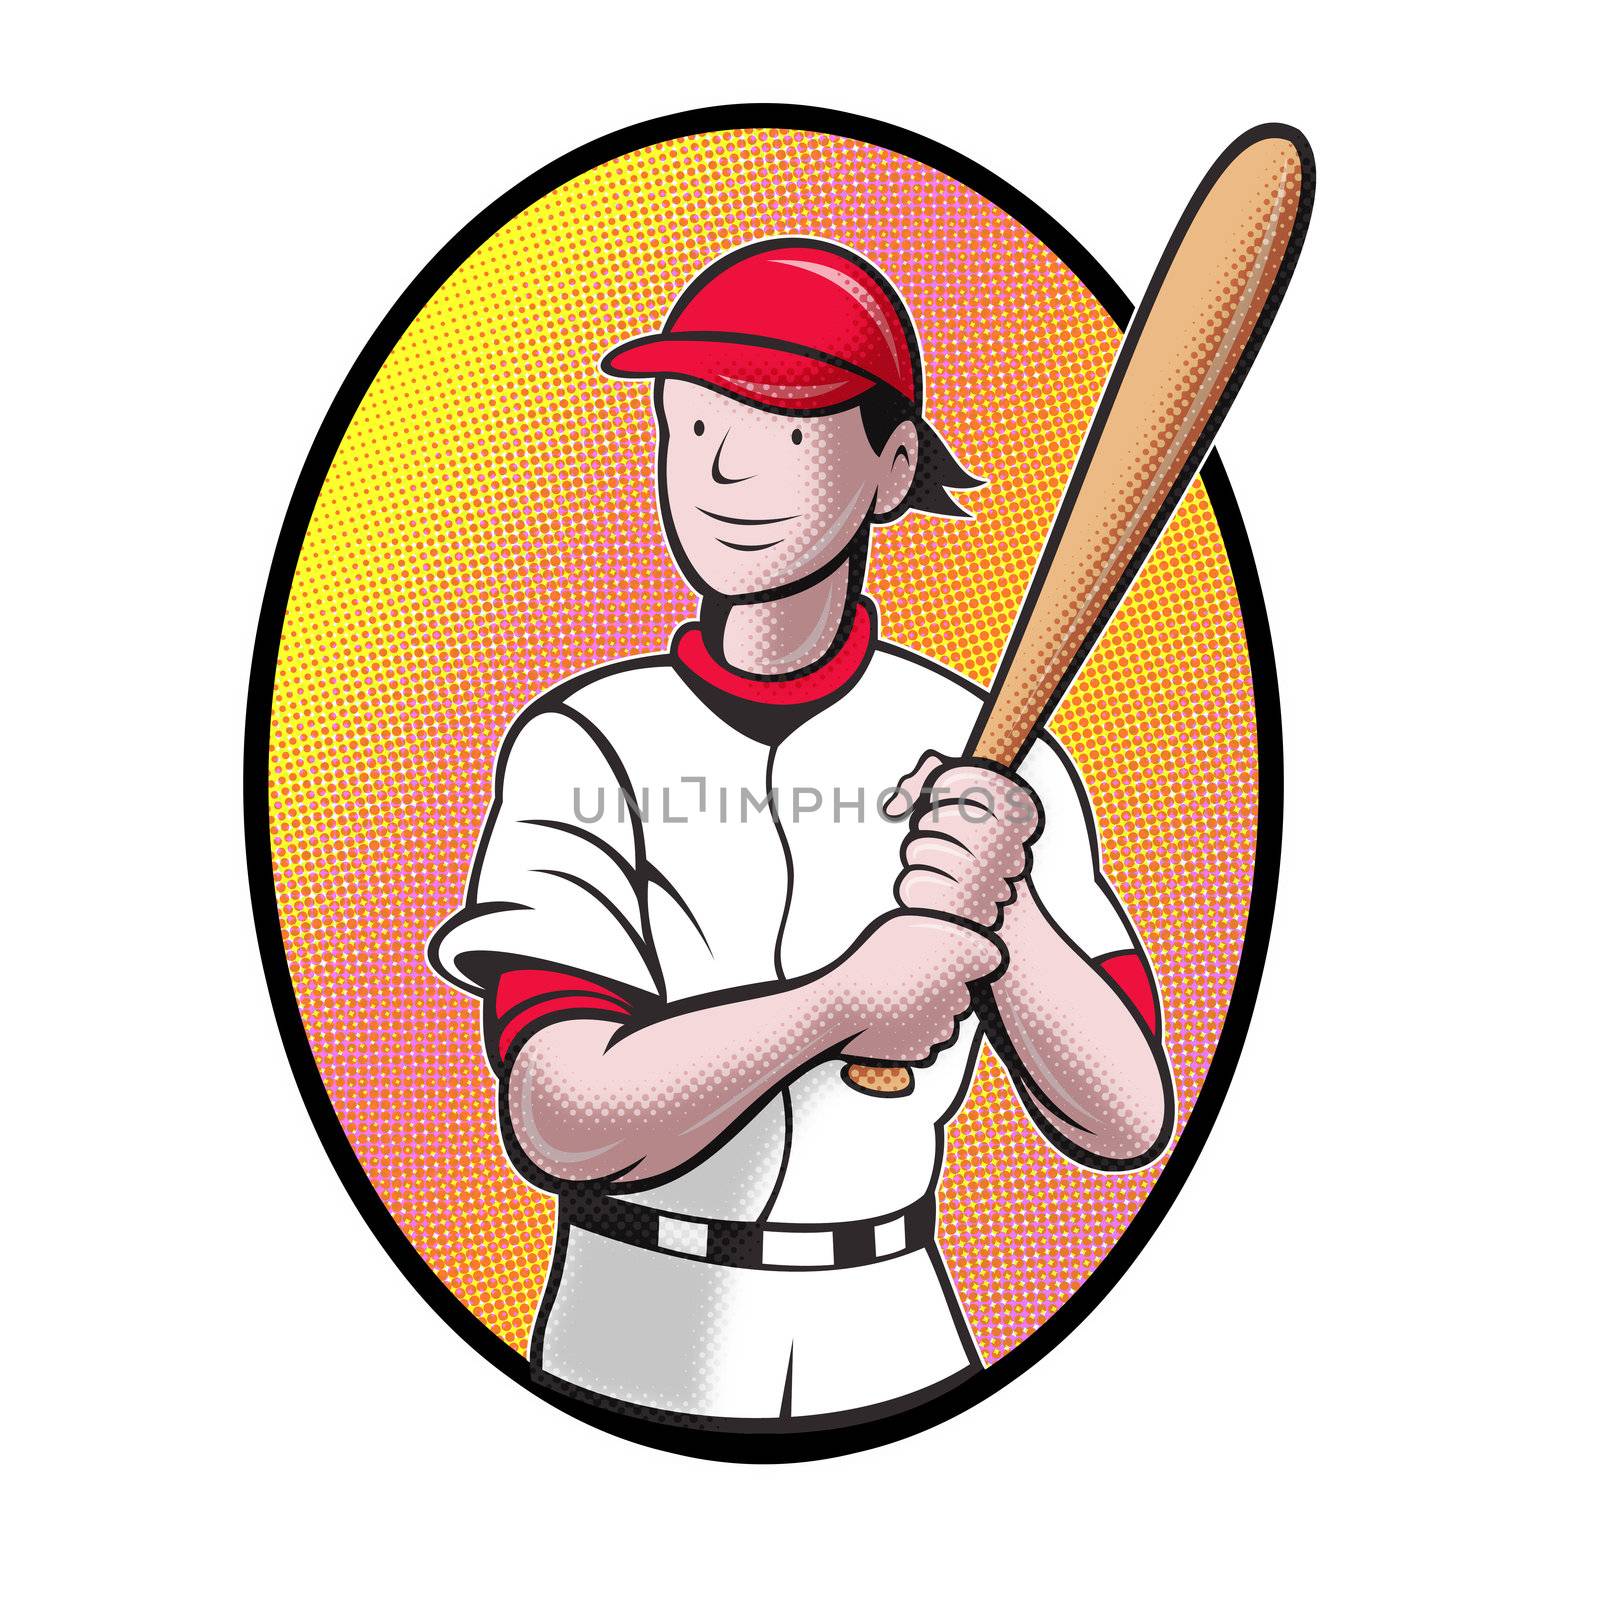 baseball player batting cartoon style by patrimonio